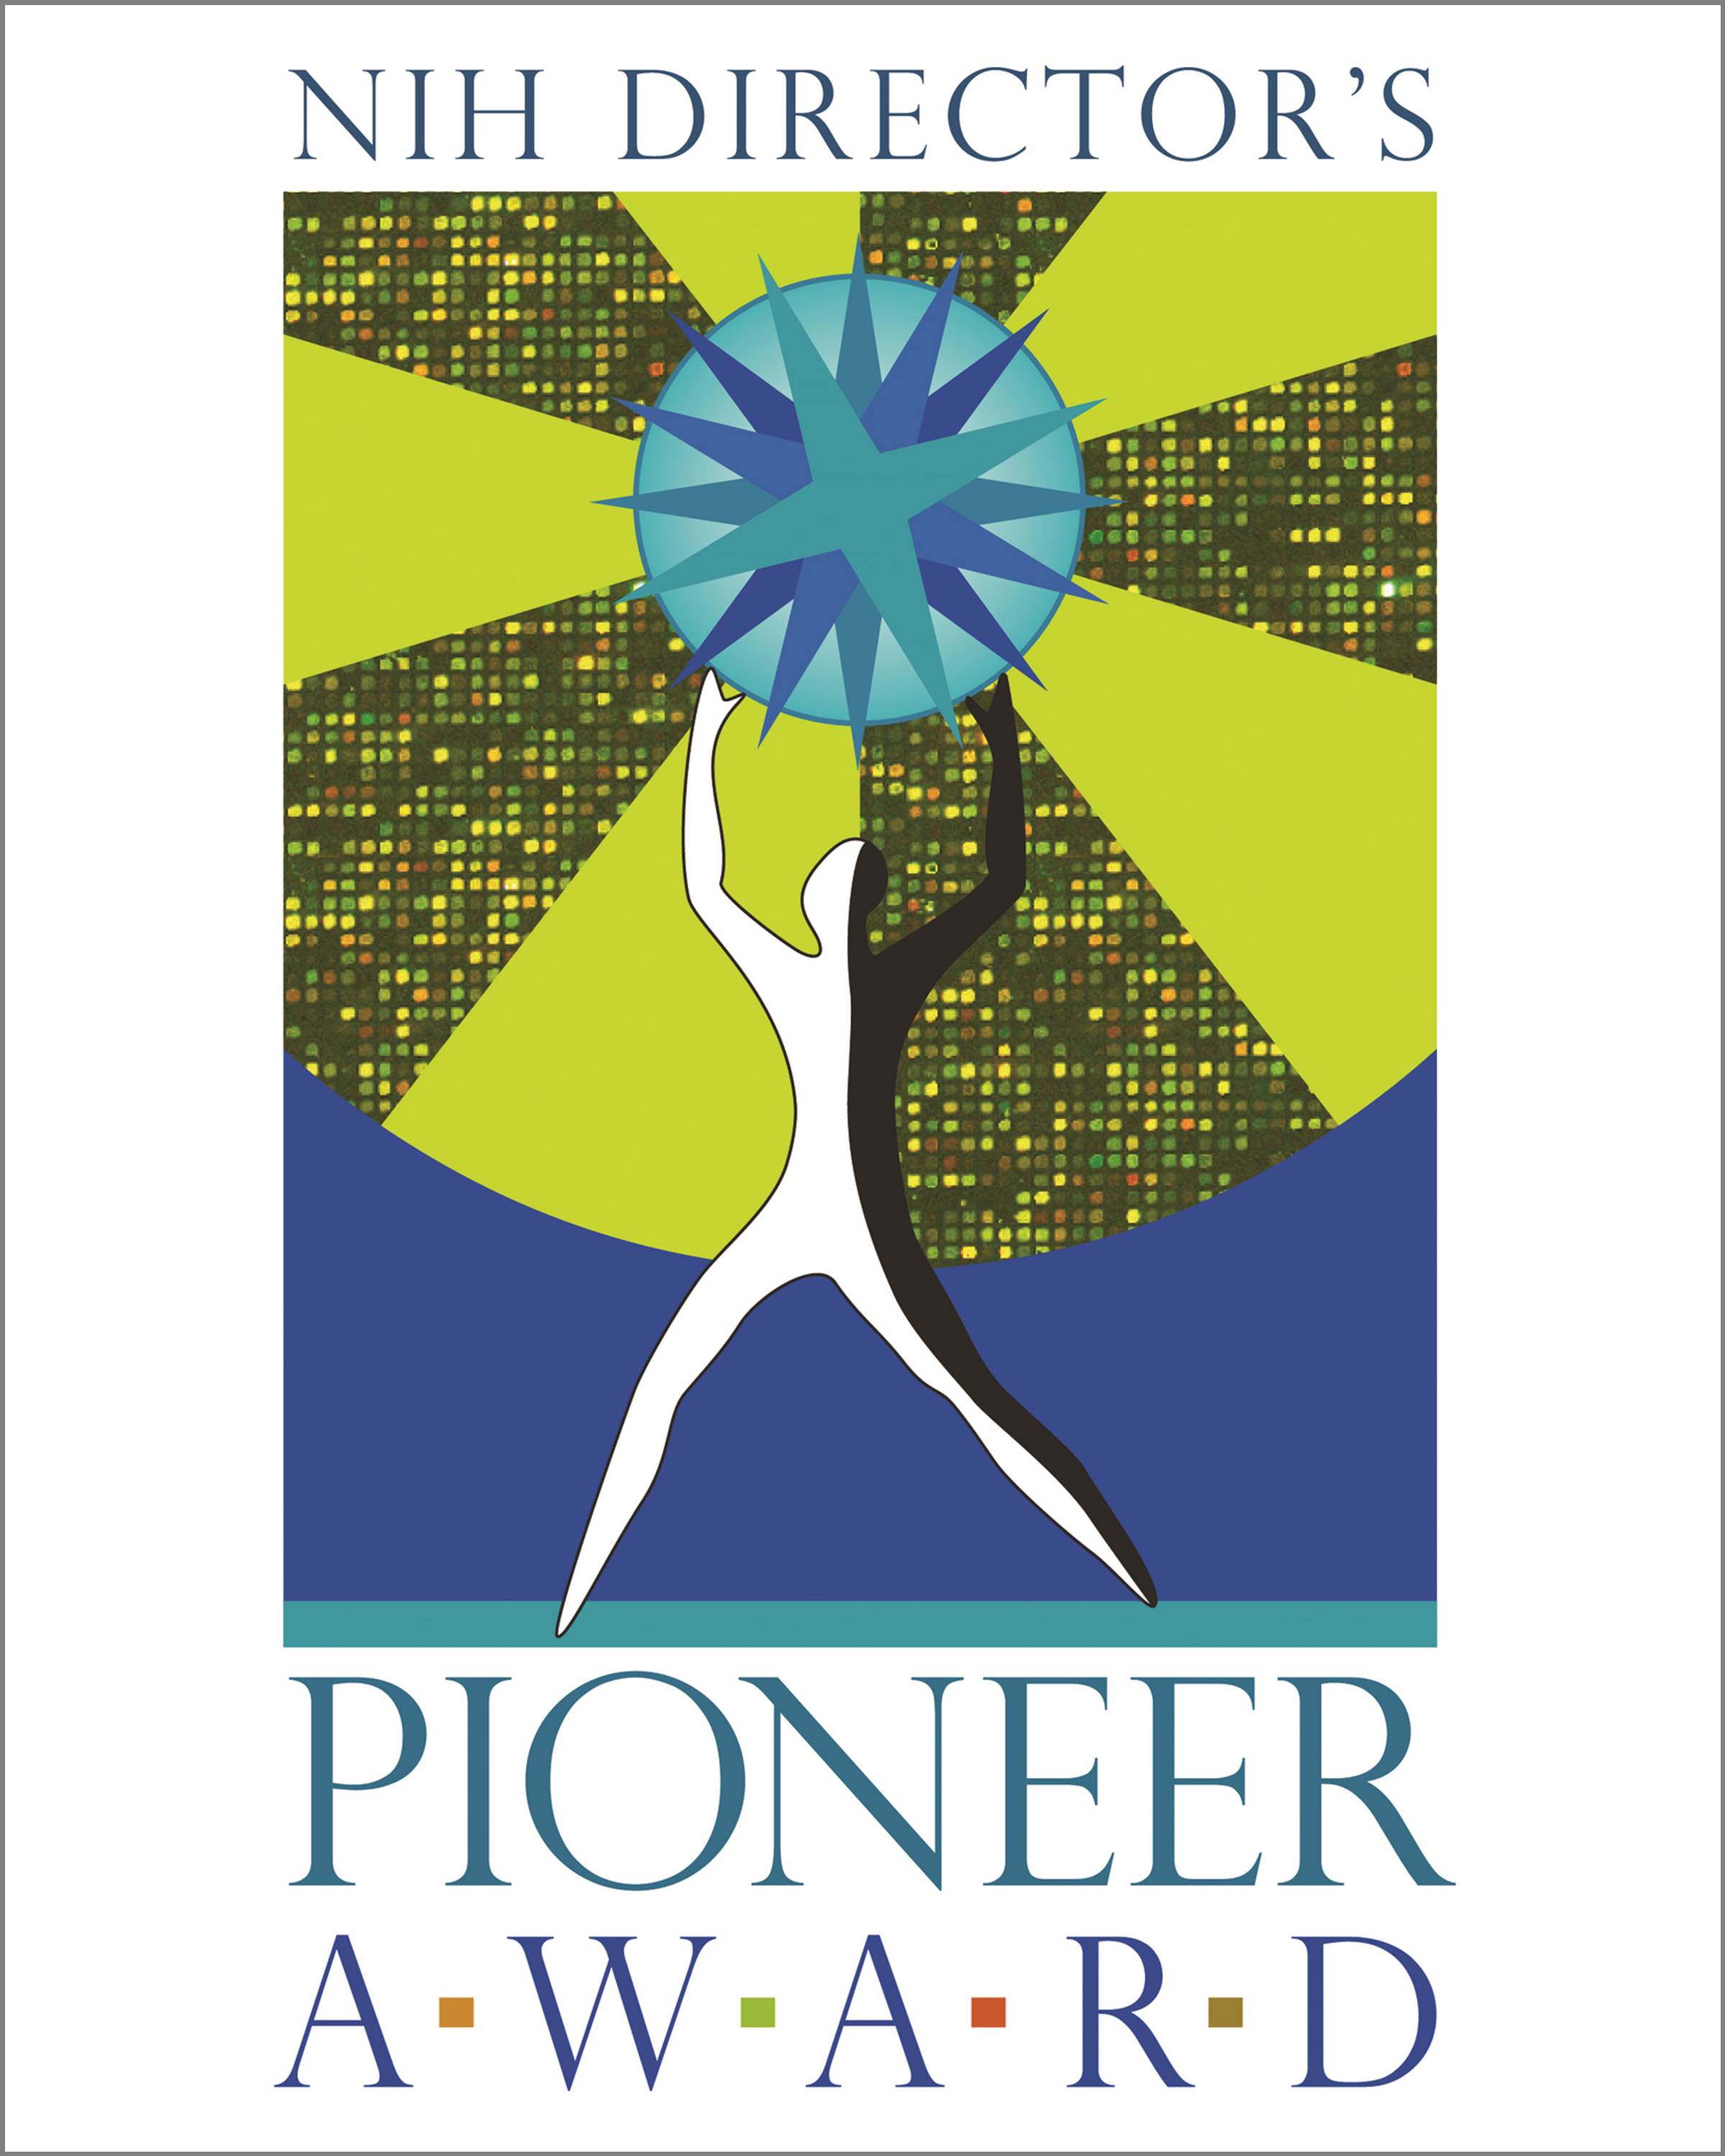 NIH Director's Pioneer Award